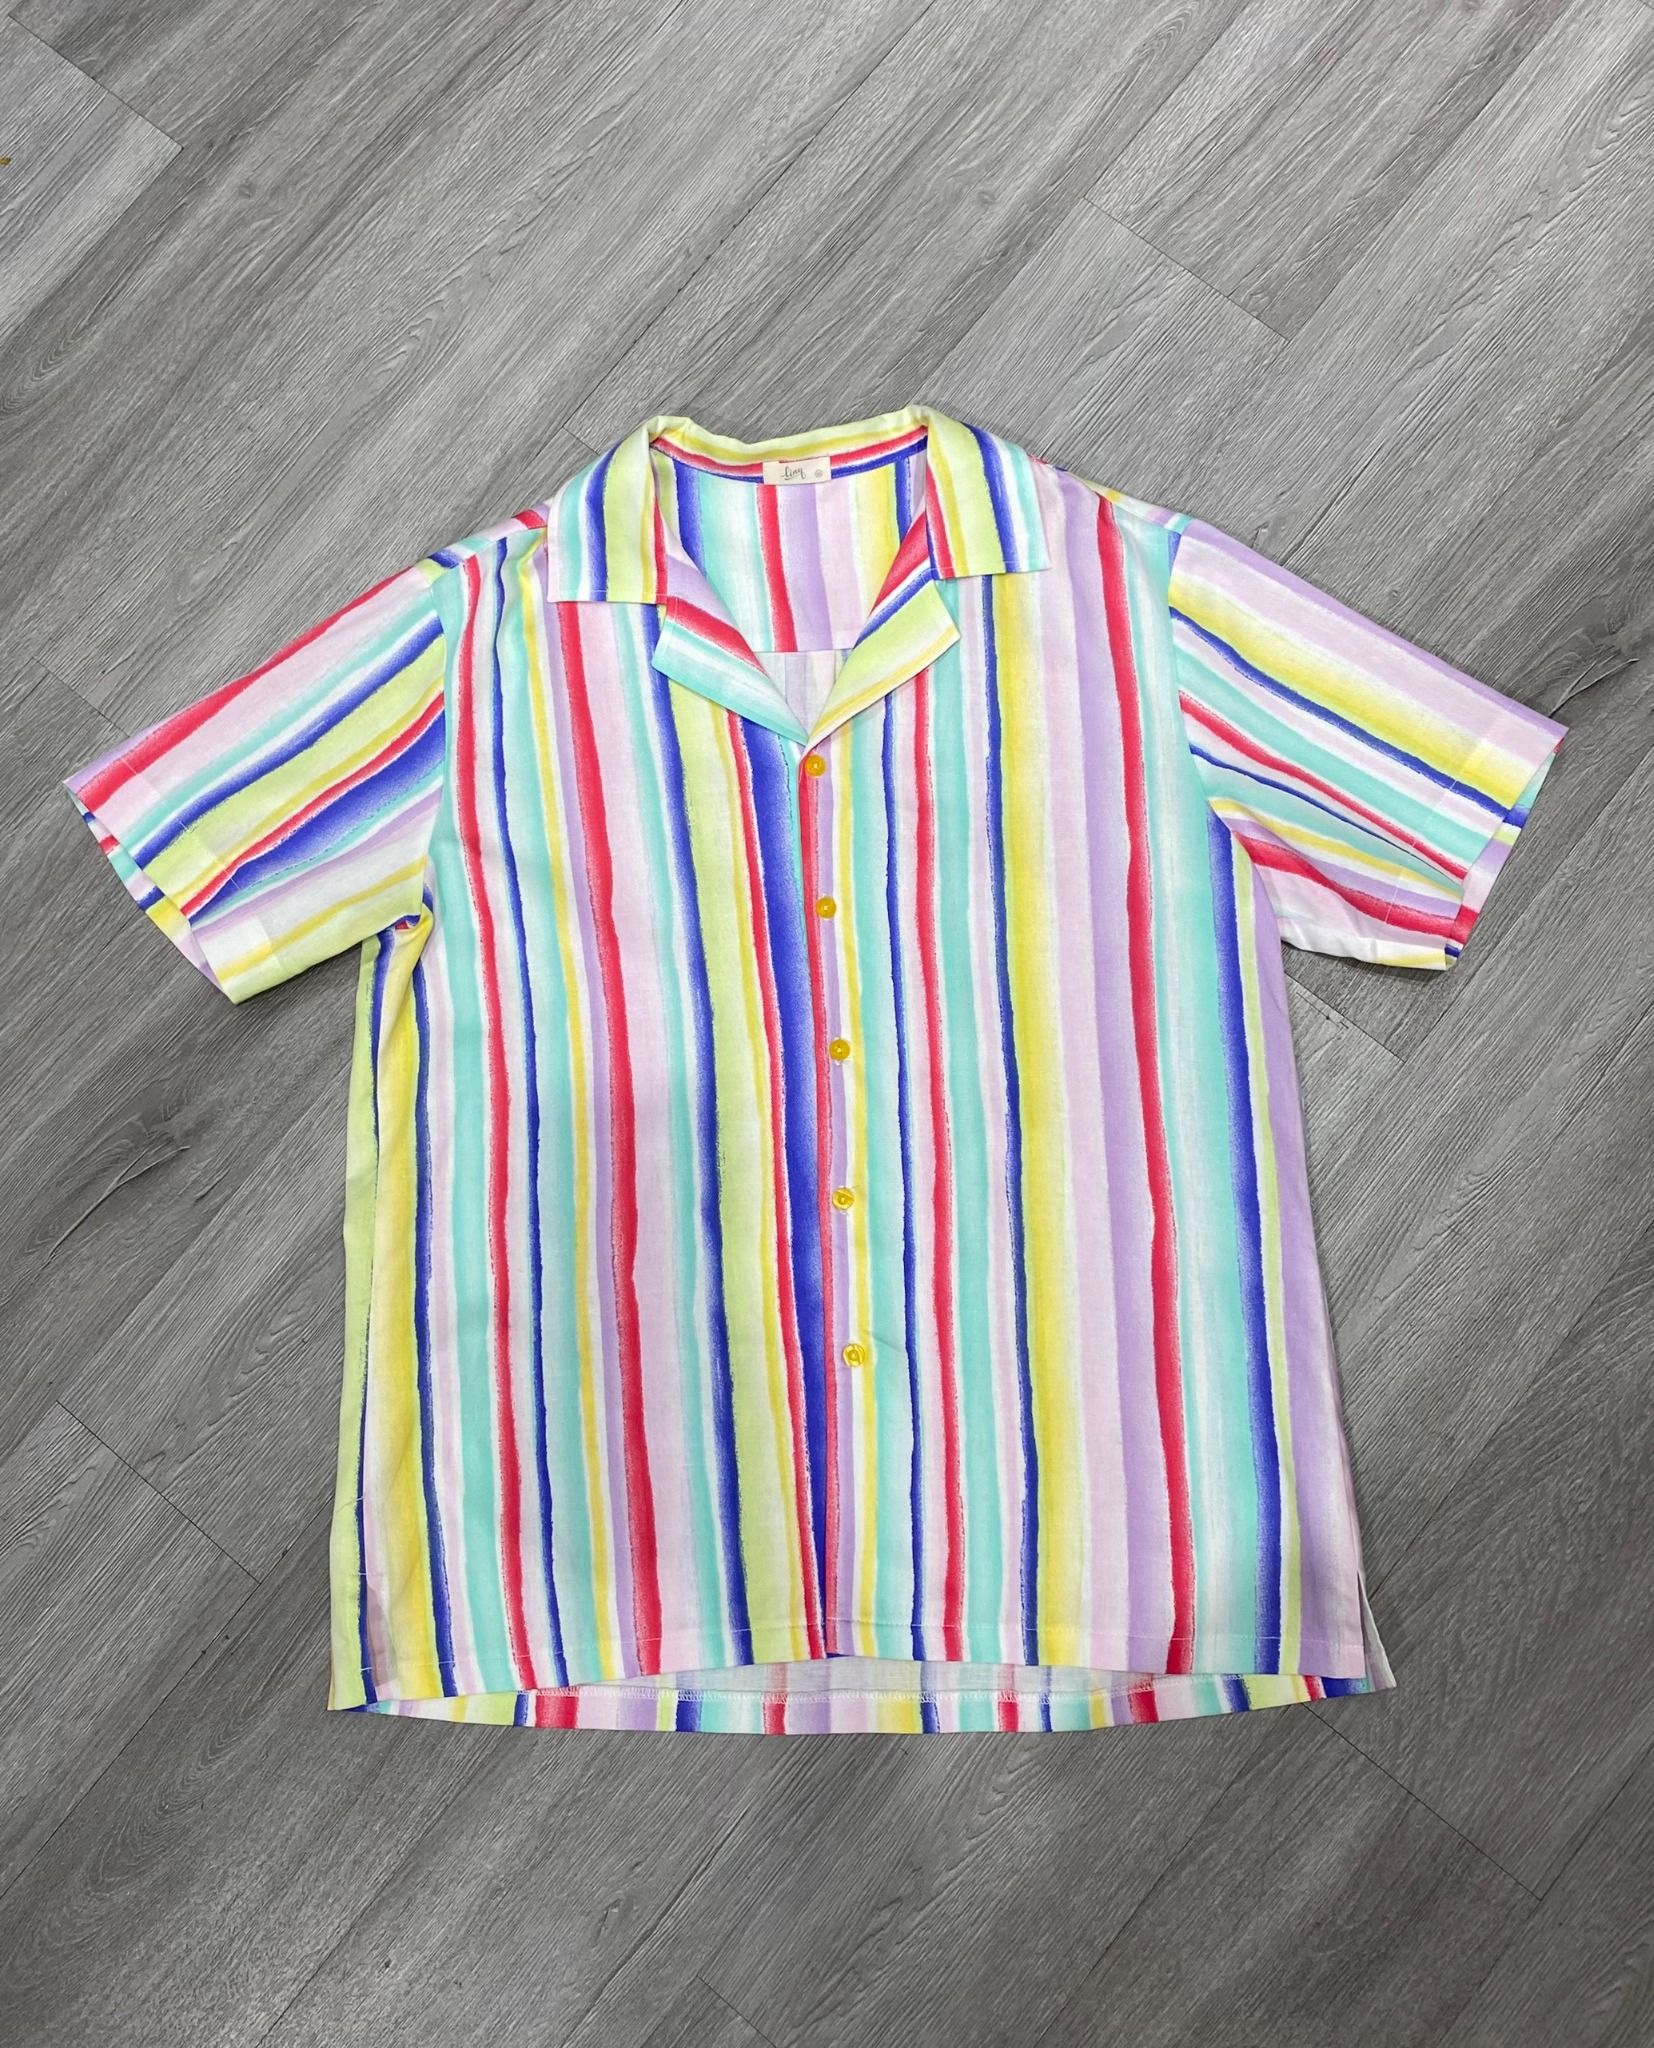  Rainbow shirt for Dad 